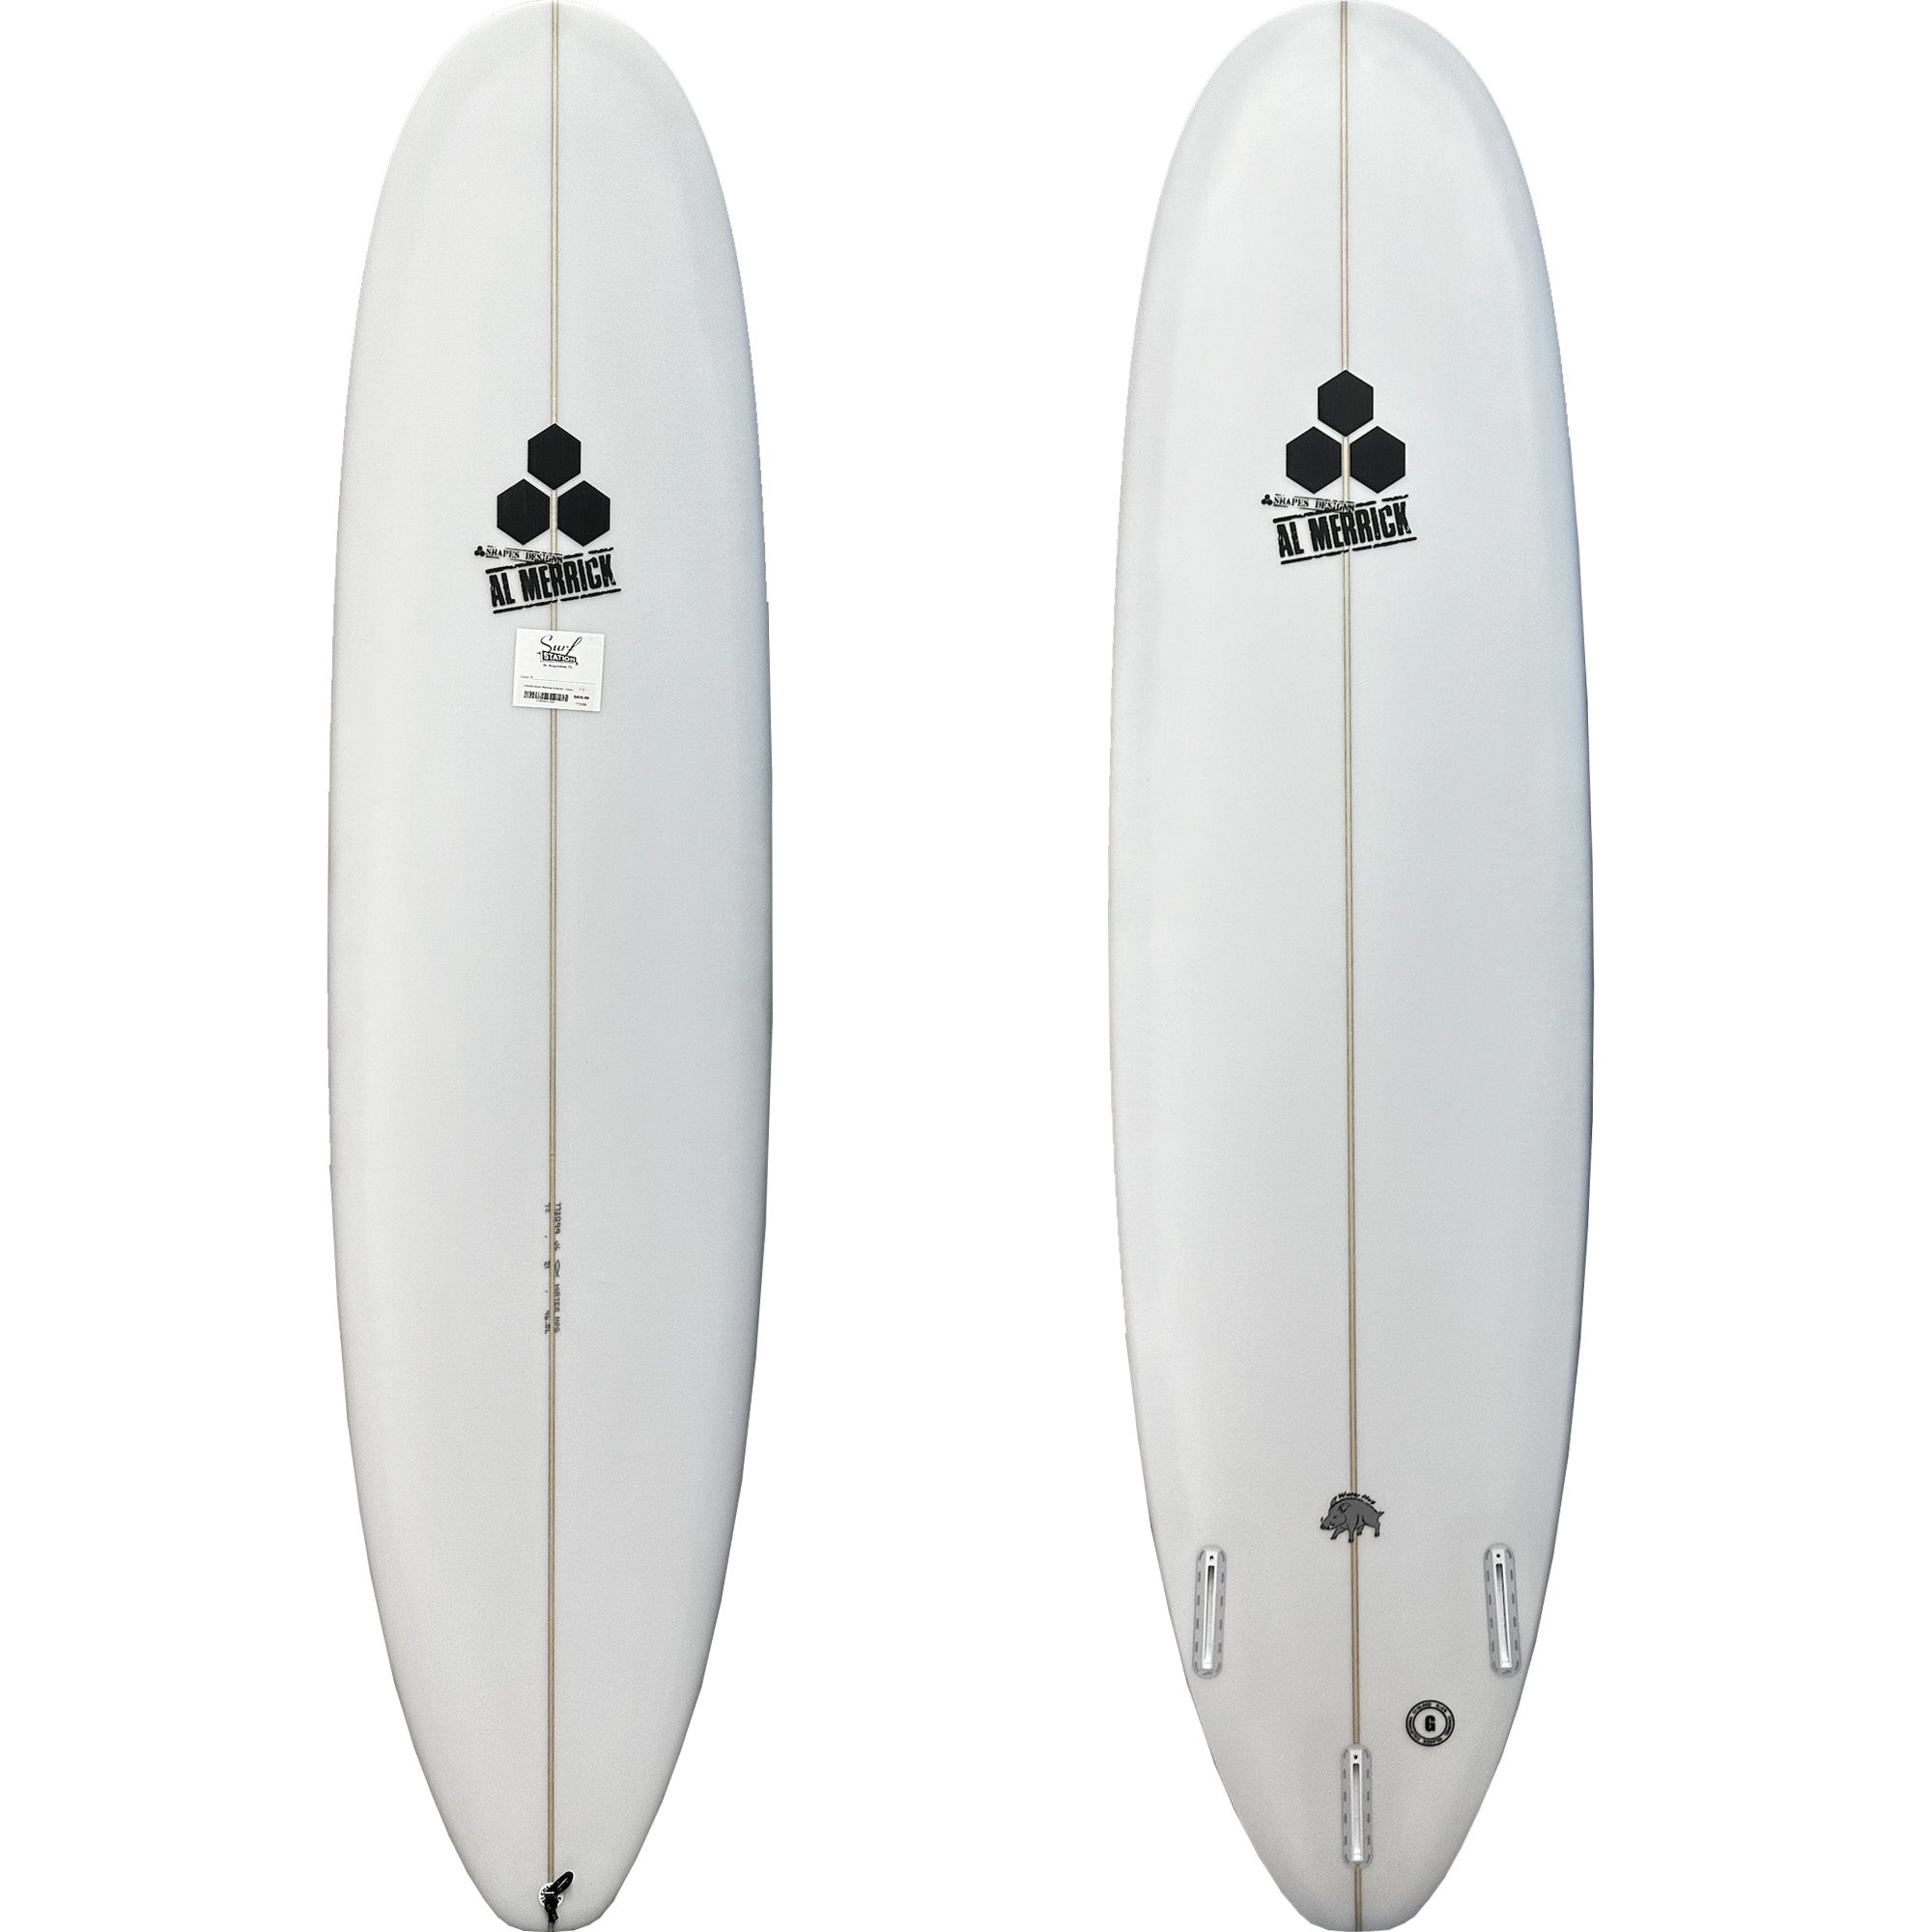 Channel Islands Water Hog - Surfboards: Reviews